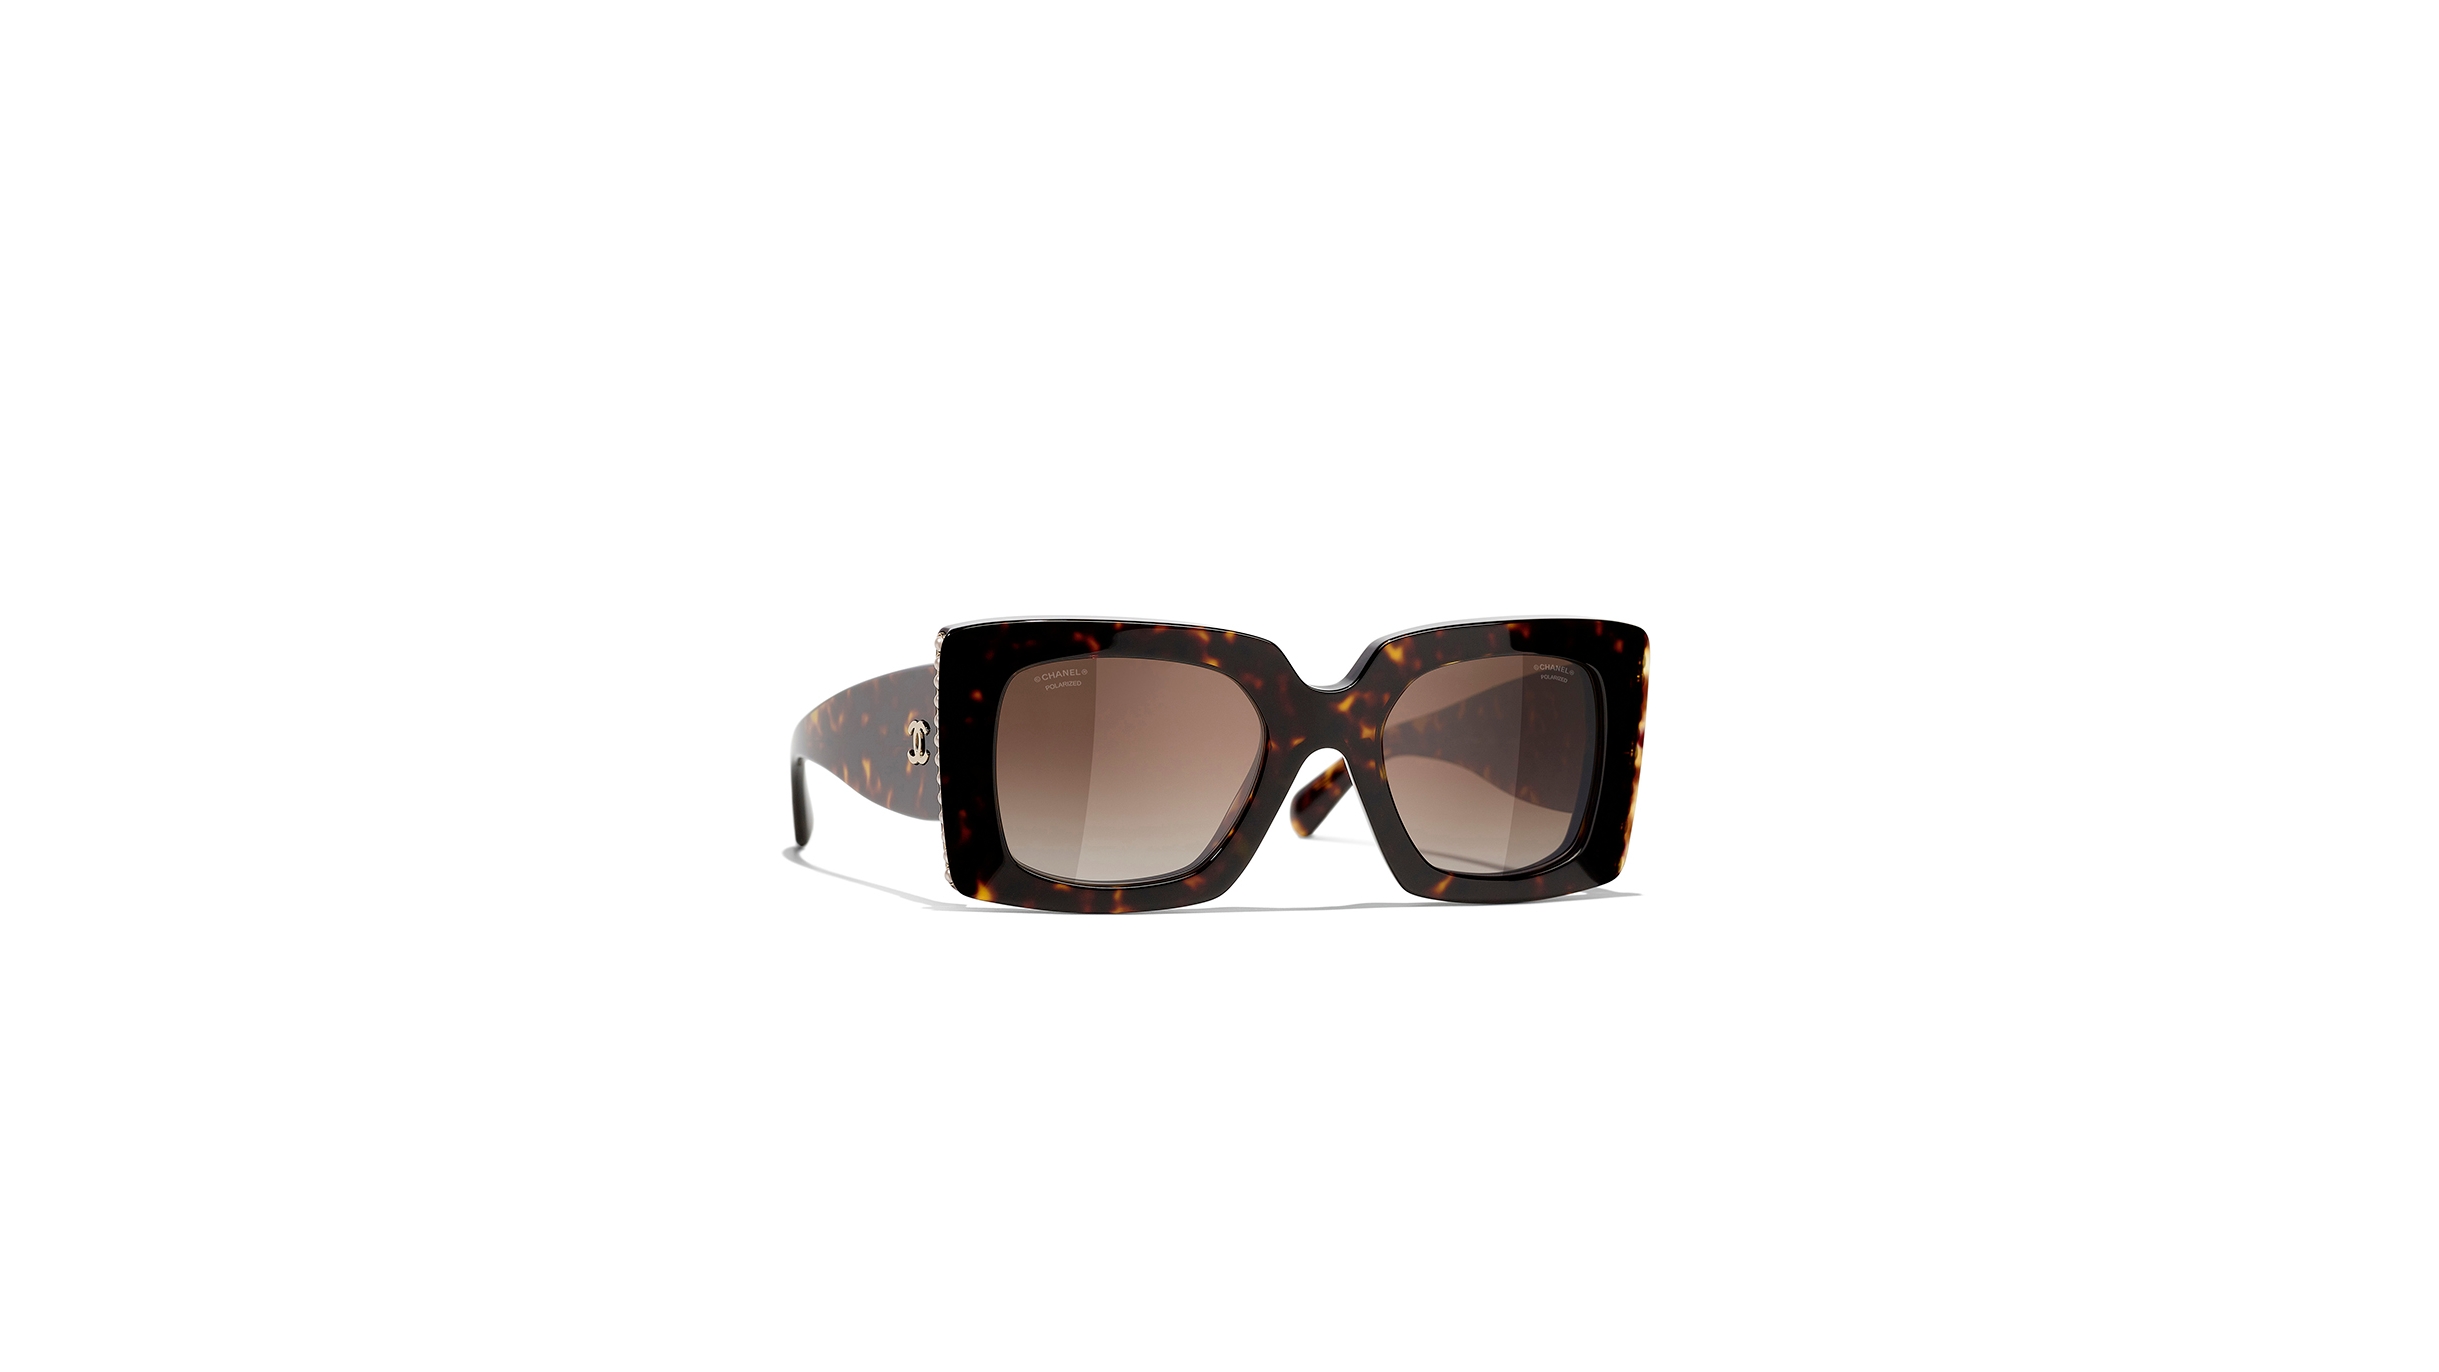 CHANEL Square sunglasses - Harvey Nichols